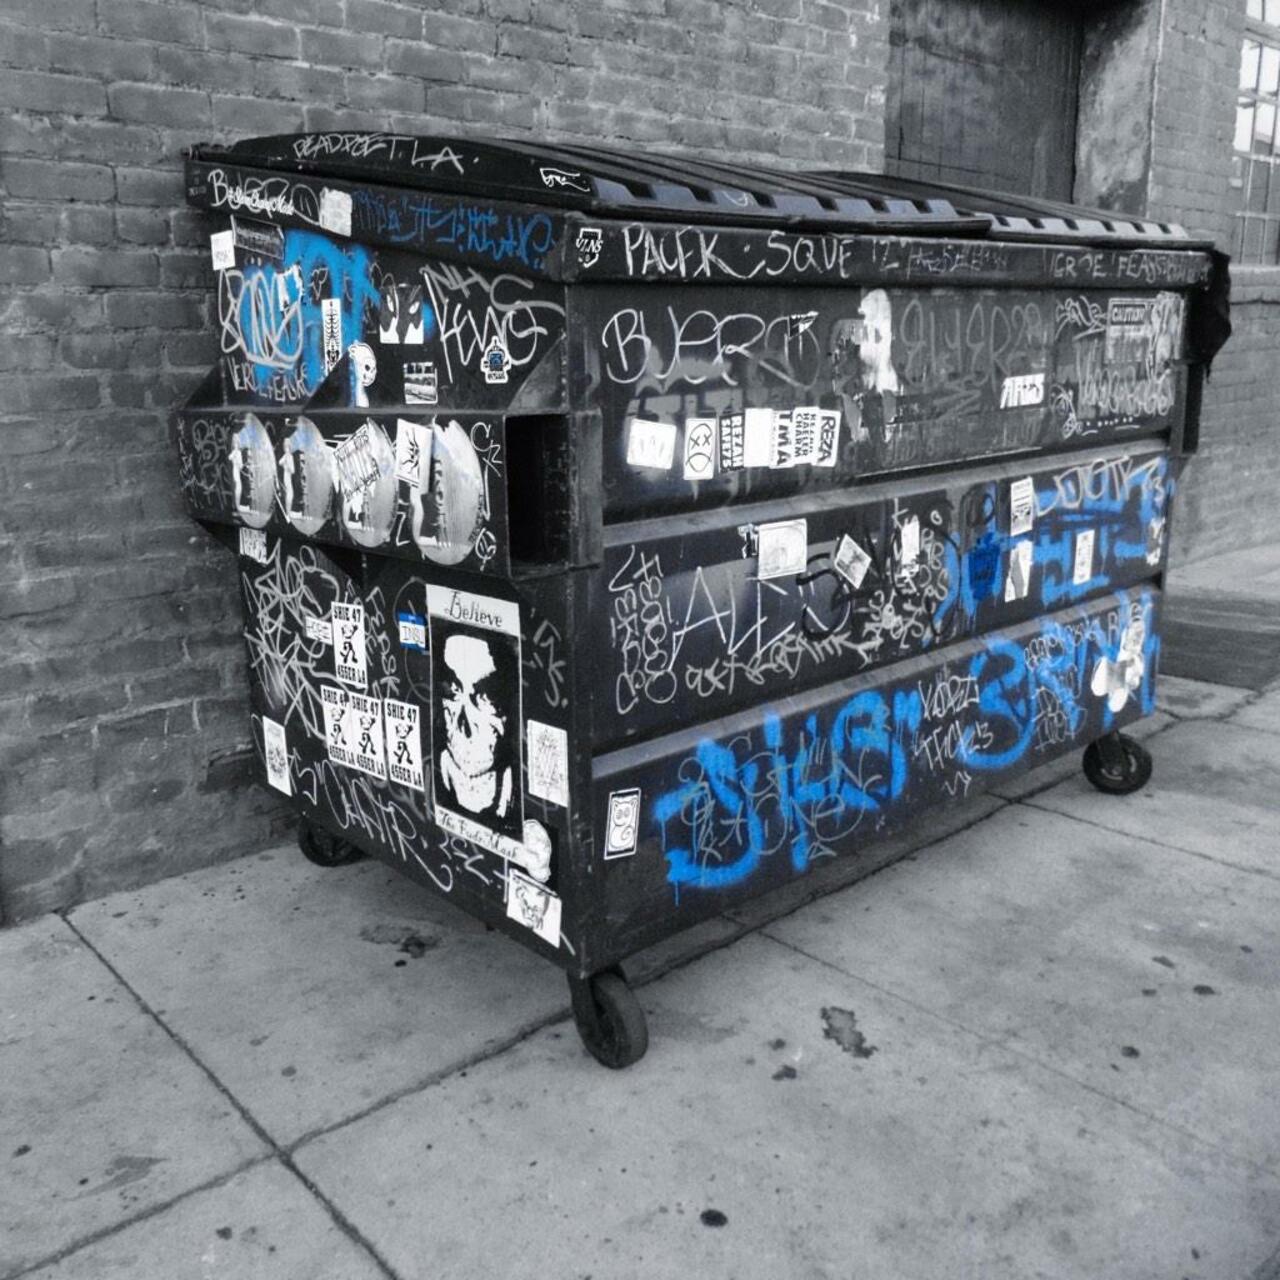 "One man's thrash" #trash #dumpster #garbage #graffiti #tagging #tag #blue #photograpy #art #losangeles #california http://t.co/cmaMftREO1